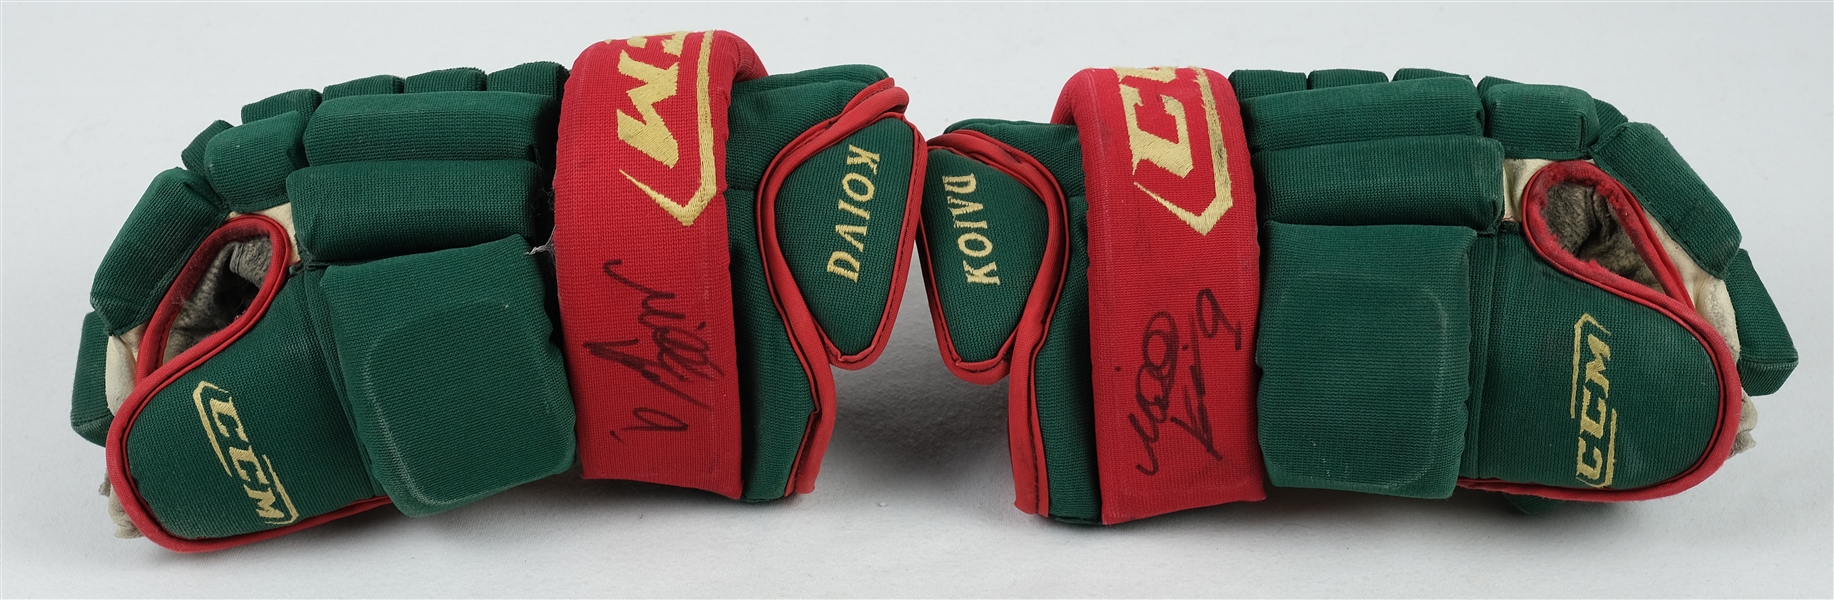 Mikko Koivu 2008-09 Game Used & Autographed Hockey Gloves  w/Team Provenance